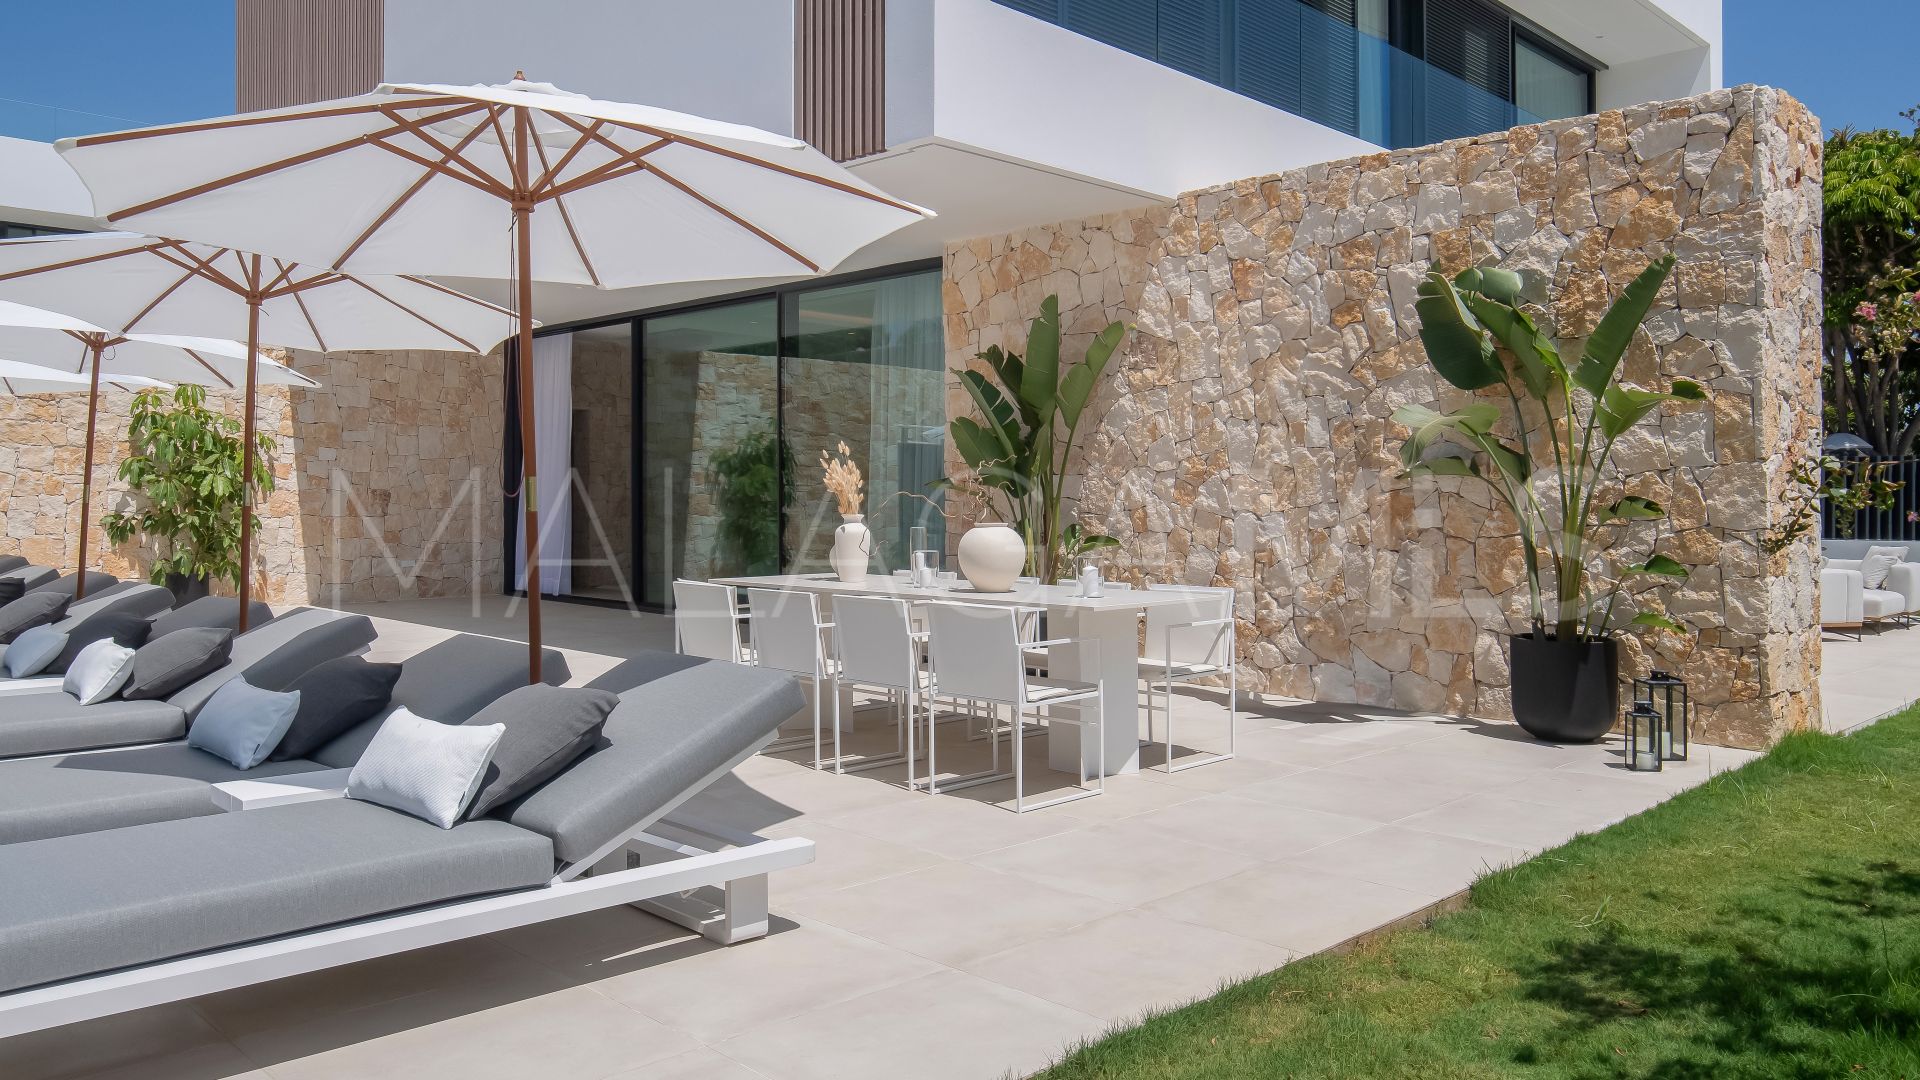 6 bedrooms villa for sale in San Pedro Playa